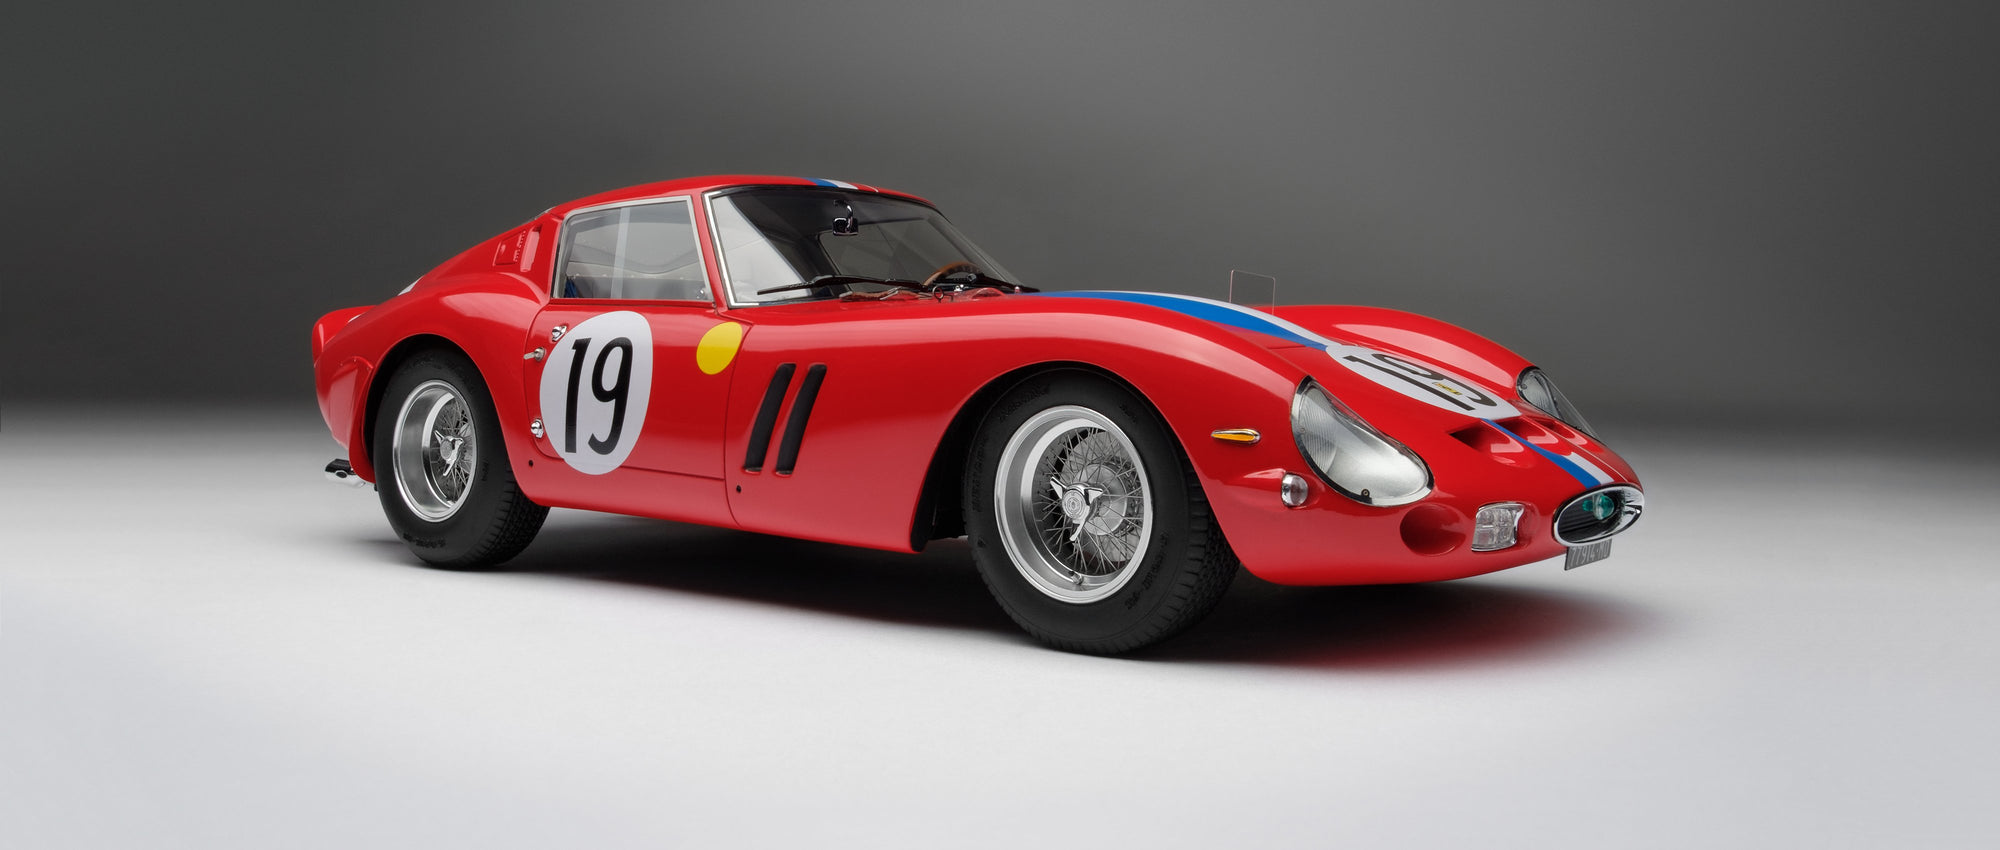 Ferrari 250 GTO - 3705GT - 1962 Le Mans Class Winner